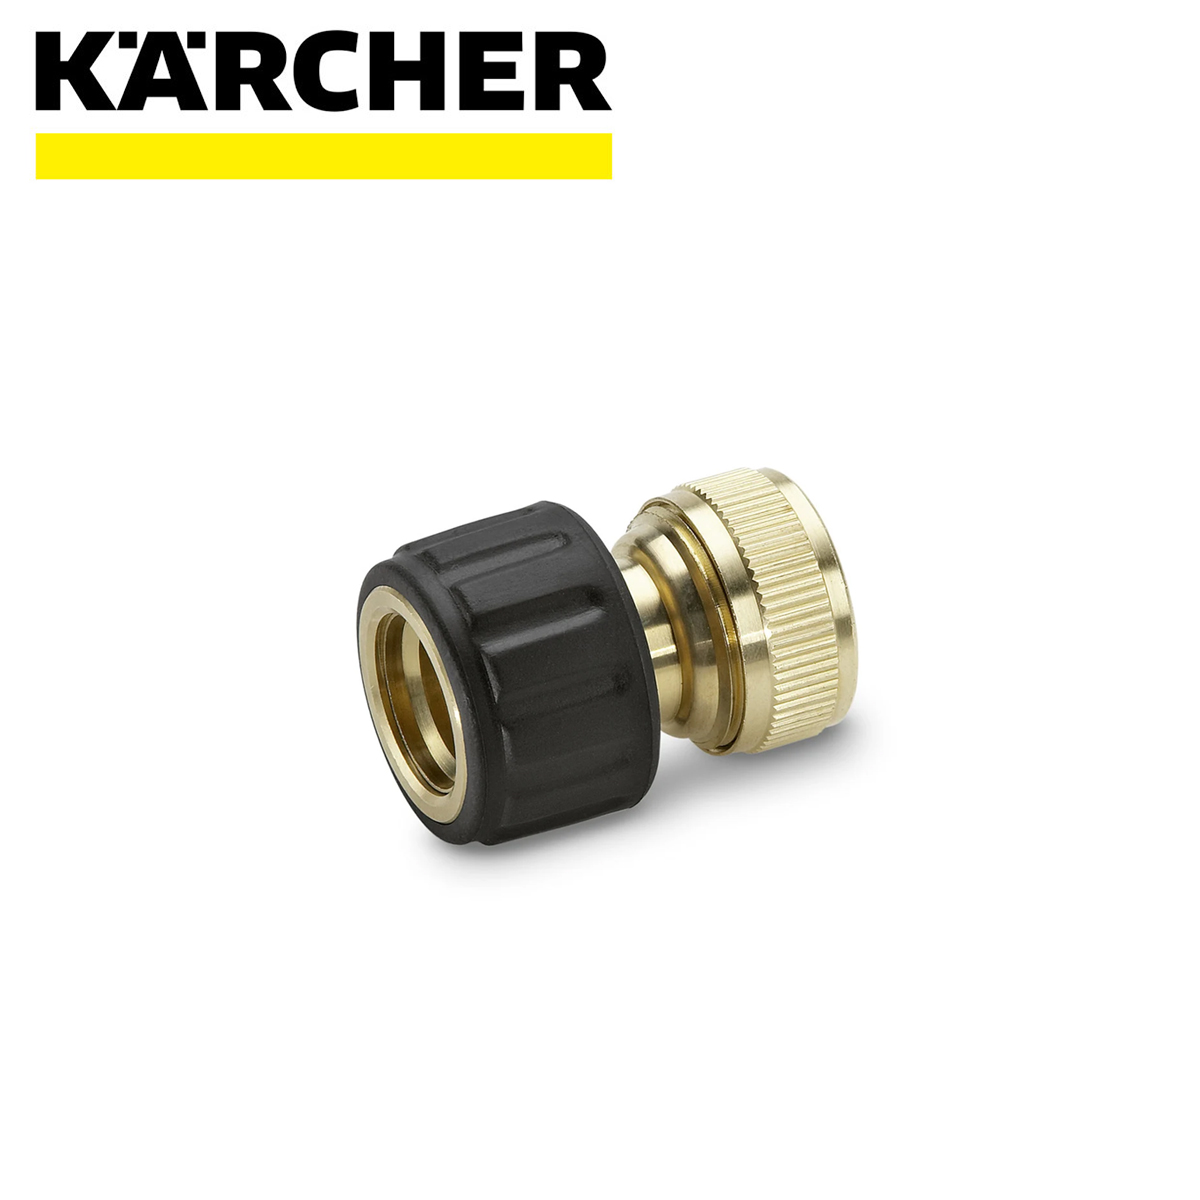 32 645 15 18. Латунный коннектор 1/2 Karcher. Керхер латунная муфта 1/2 дюйма. Karcher / латунный коннектор с аквастопом 1/2''. Коннектор Karcher 26450150.